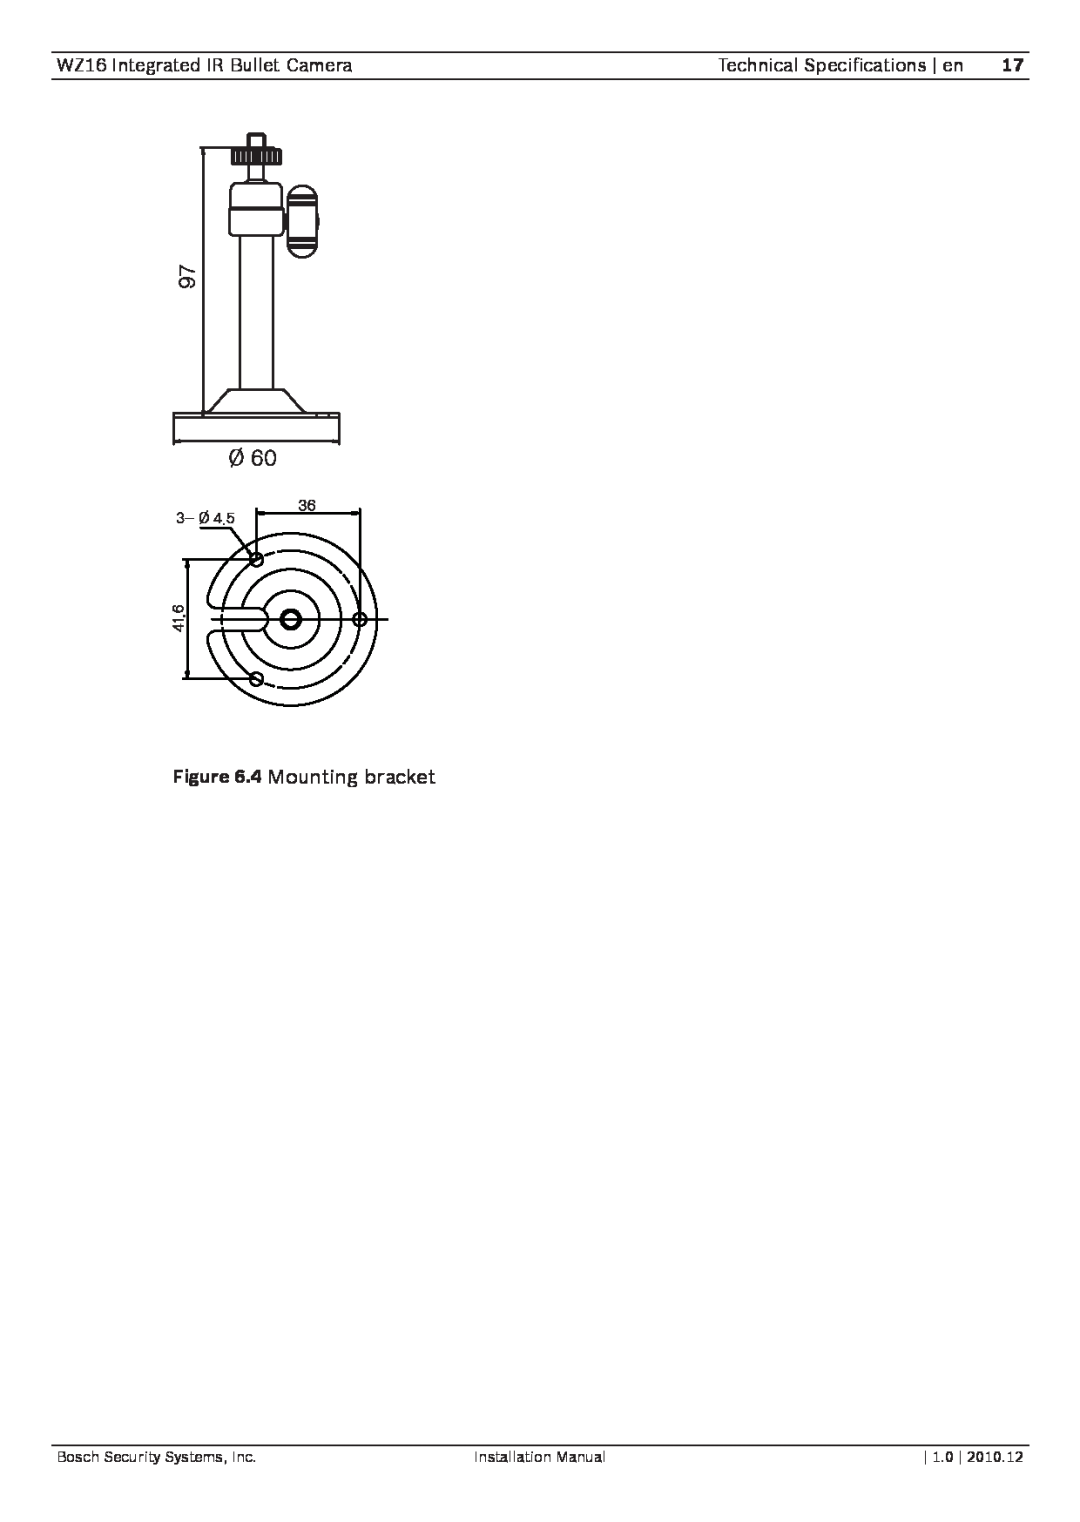 Bosch Appliances WZ16 Integrated IR Bullet Camera, Technical Specifications en, 4 Mounting bracket, Installation Manual 